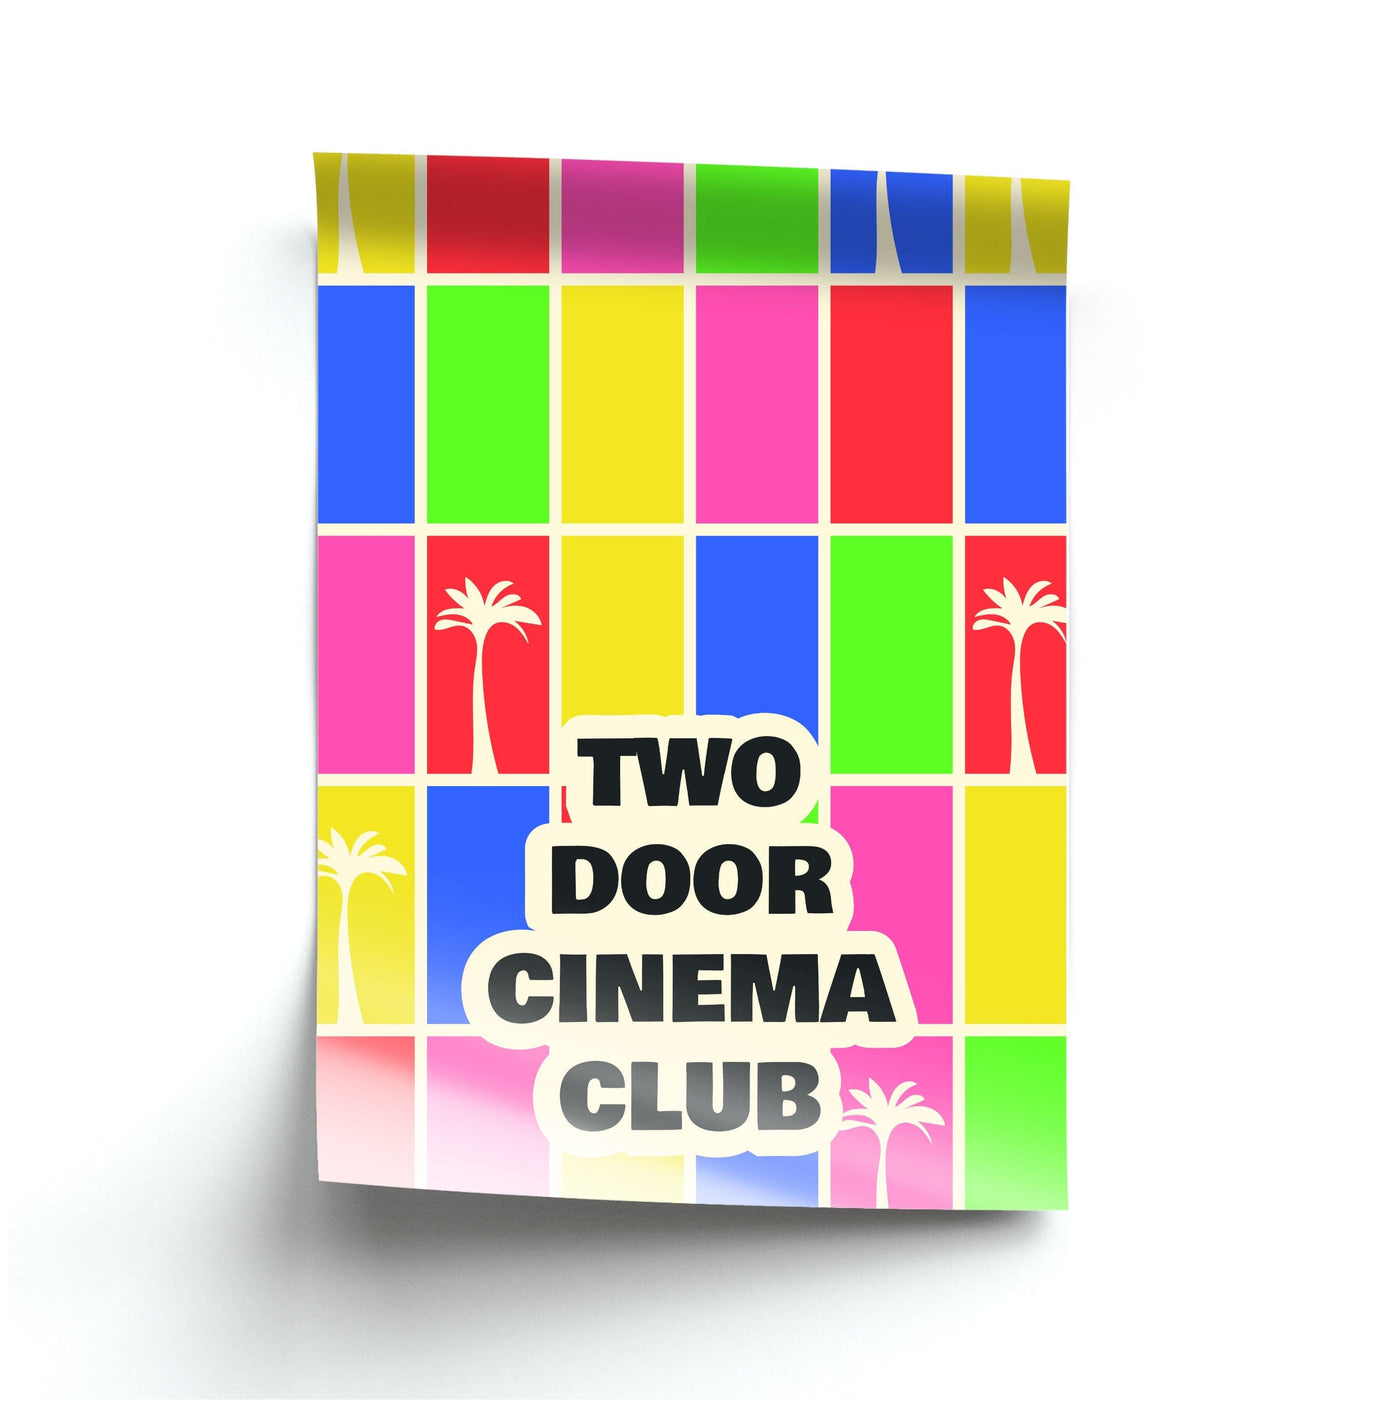 Two Door Cinema Club - Festival Poster